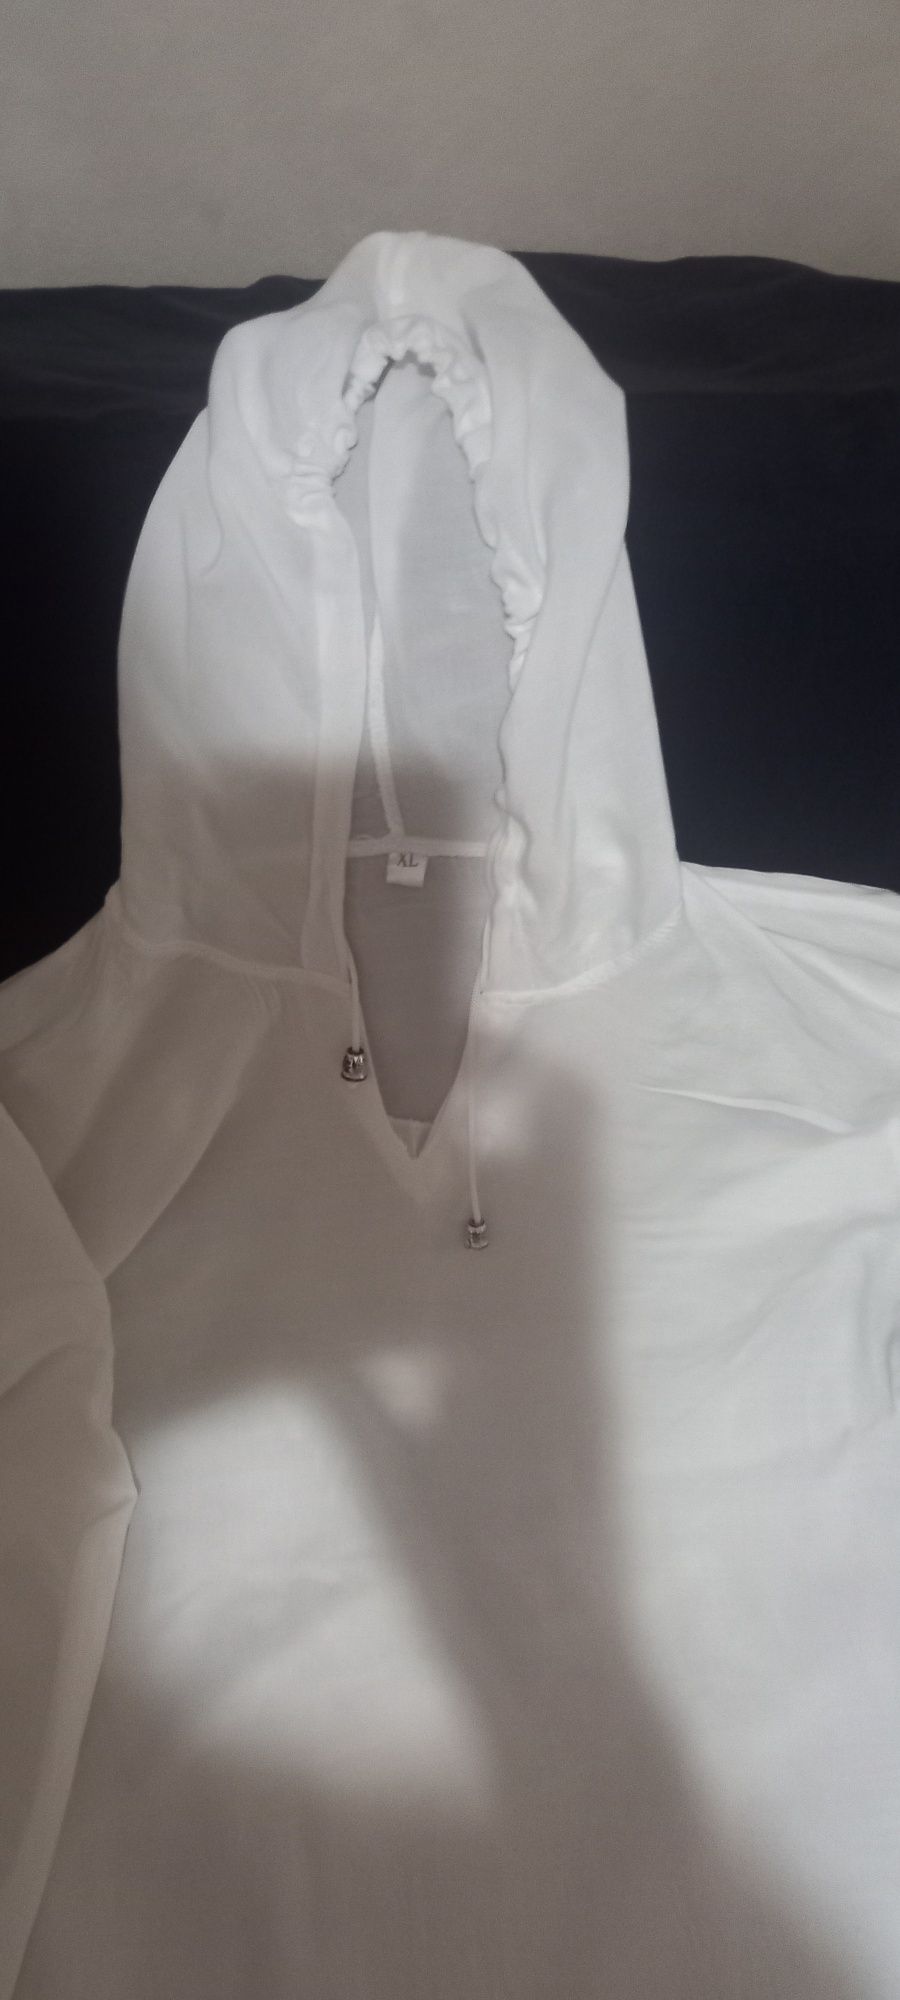 Продам х/б рубашки производства Египет от загара 44 и 50 размер.